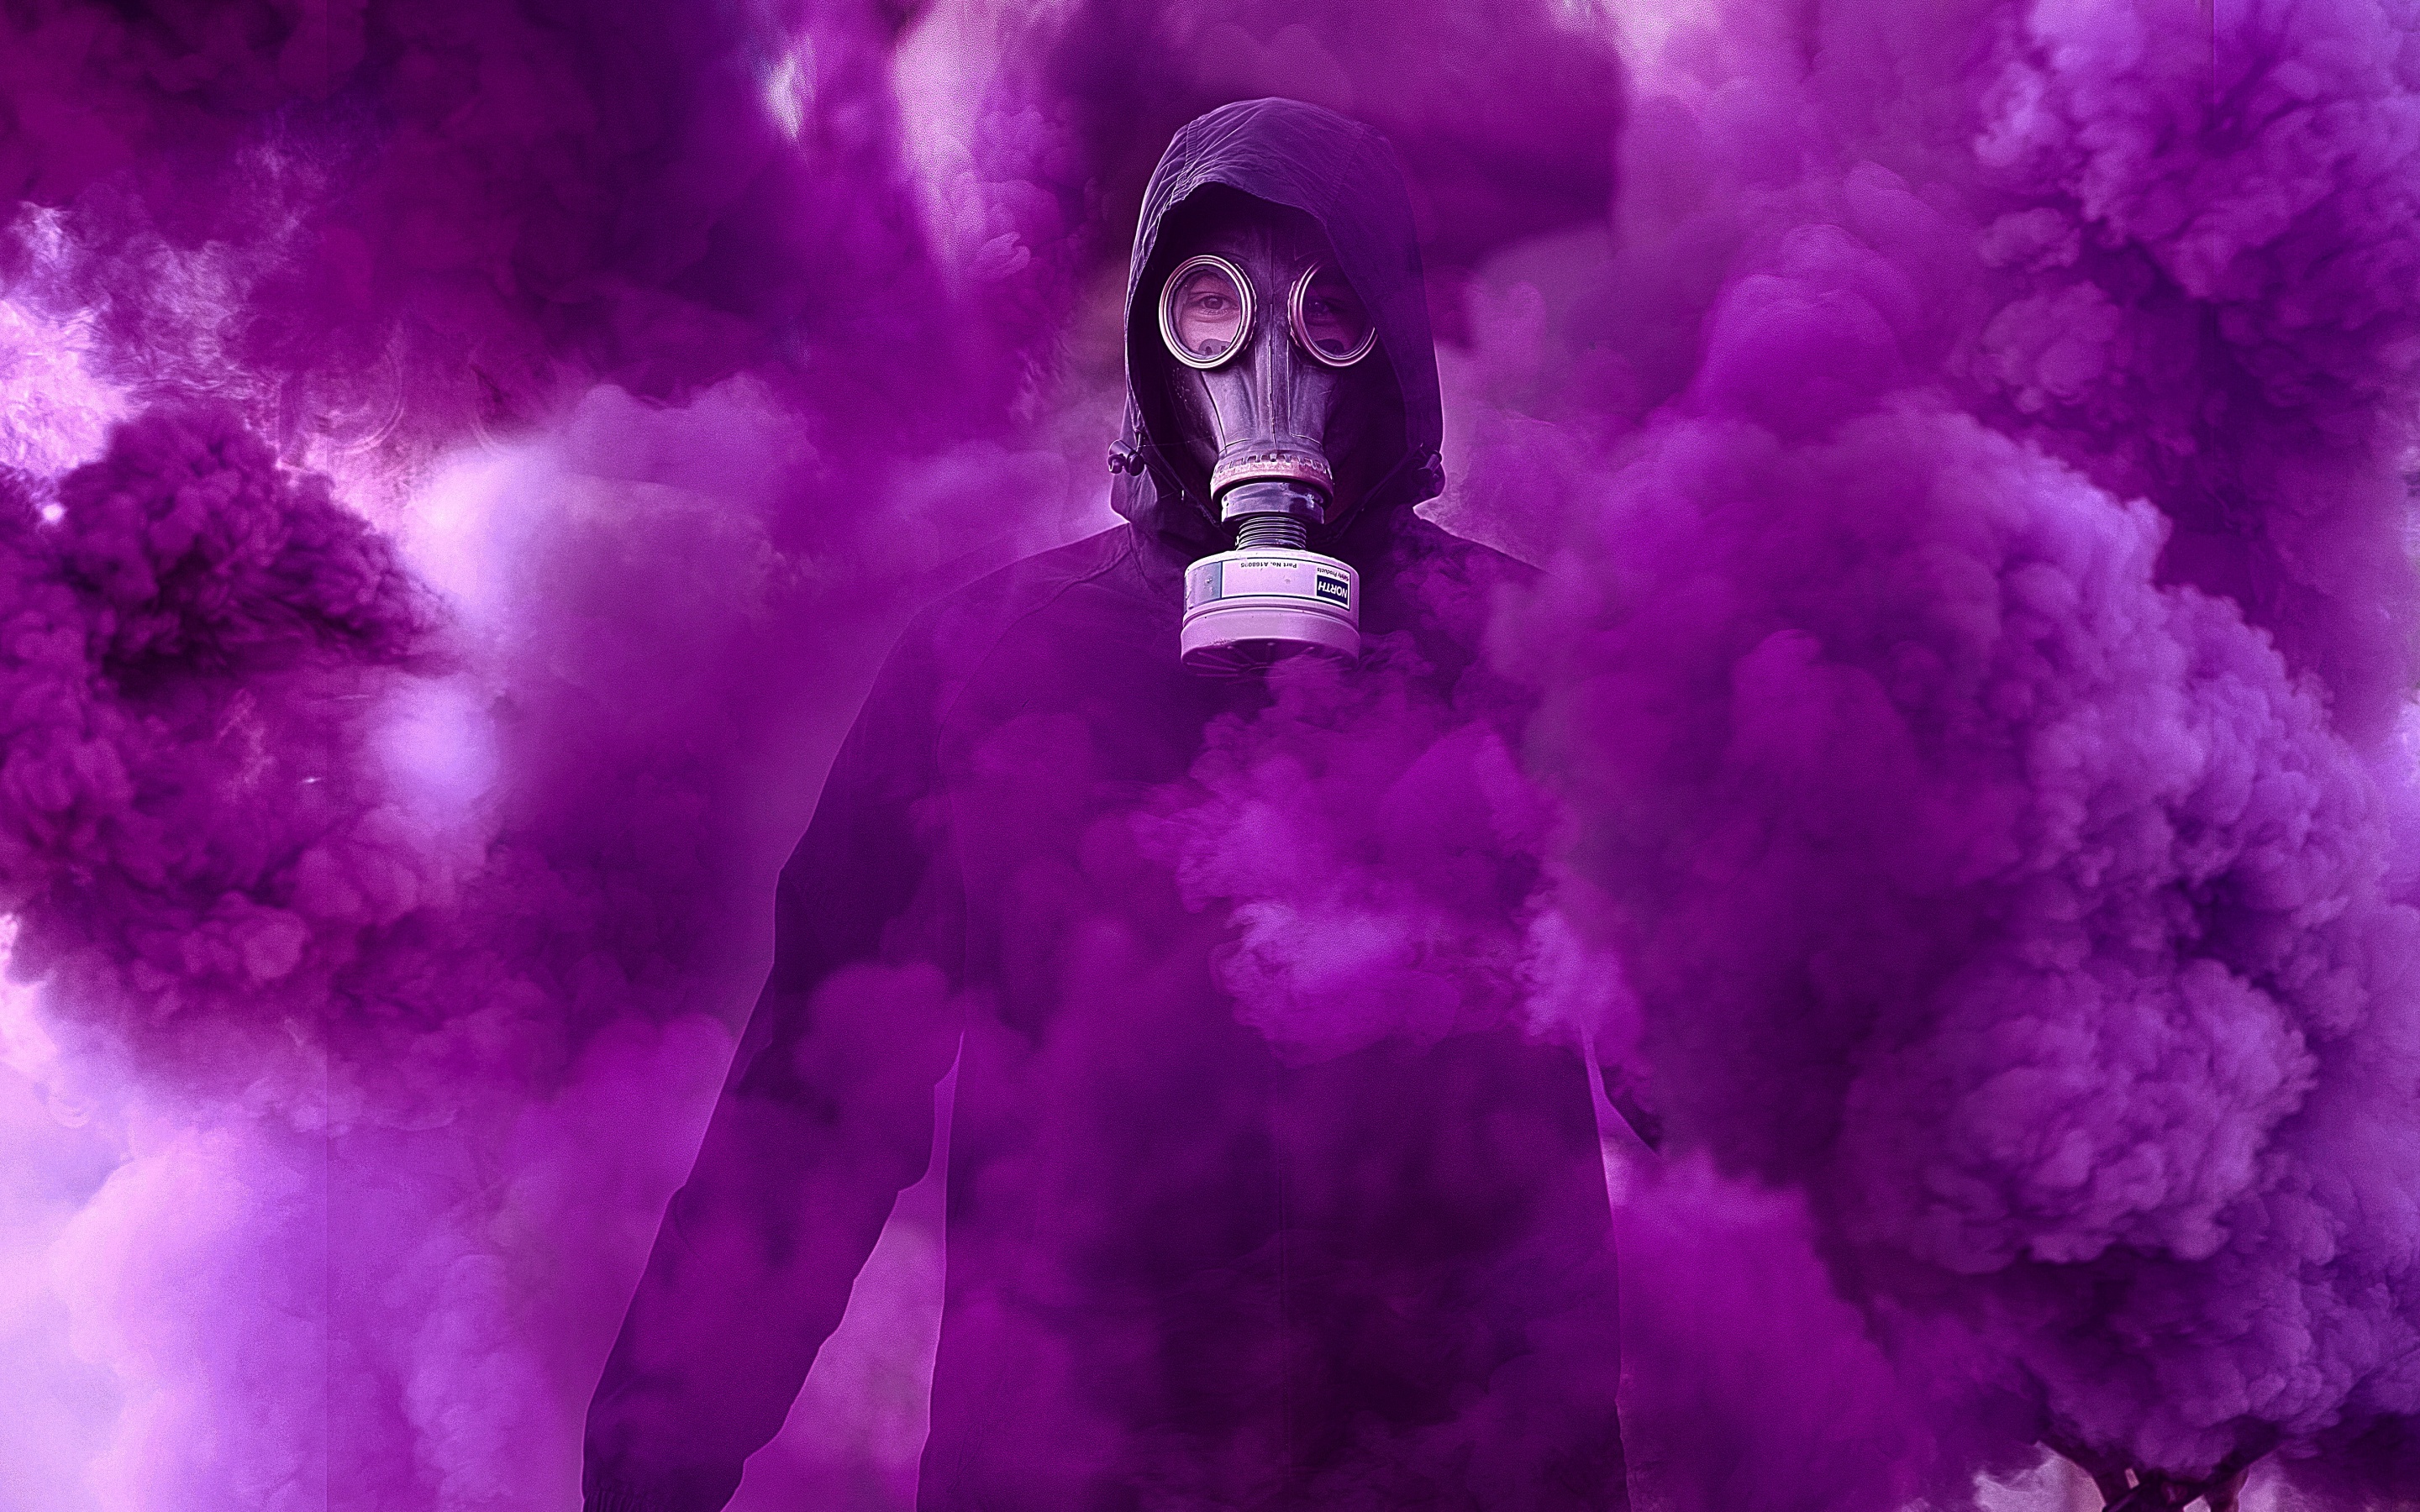 Gas mask Wallpaper 4K, Hoodie, Person in Black, Purple Smoke, People, #3324